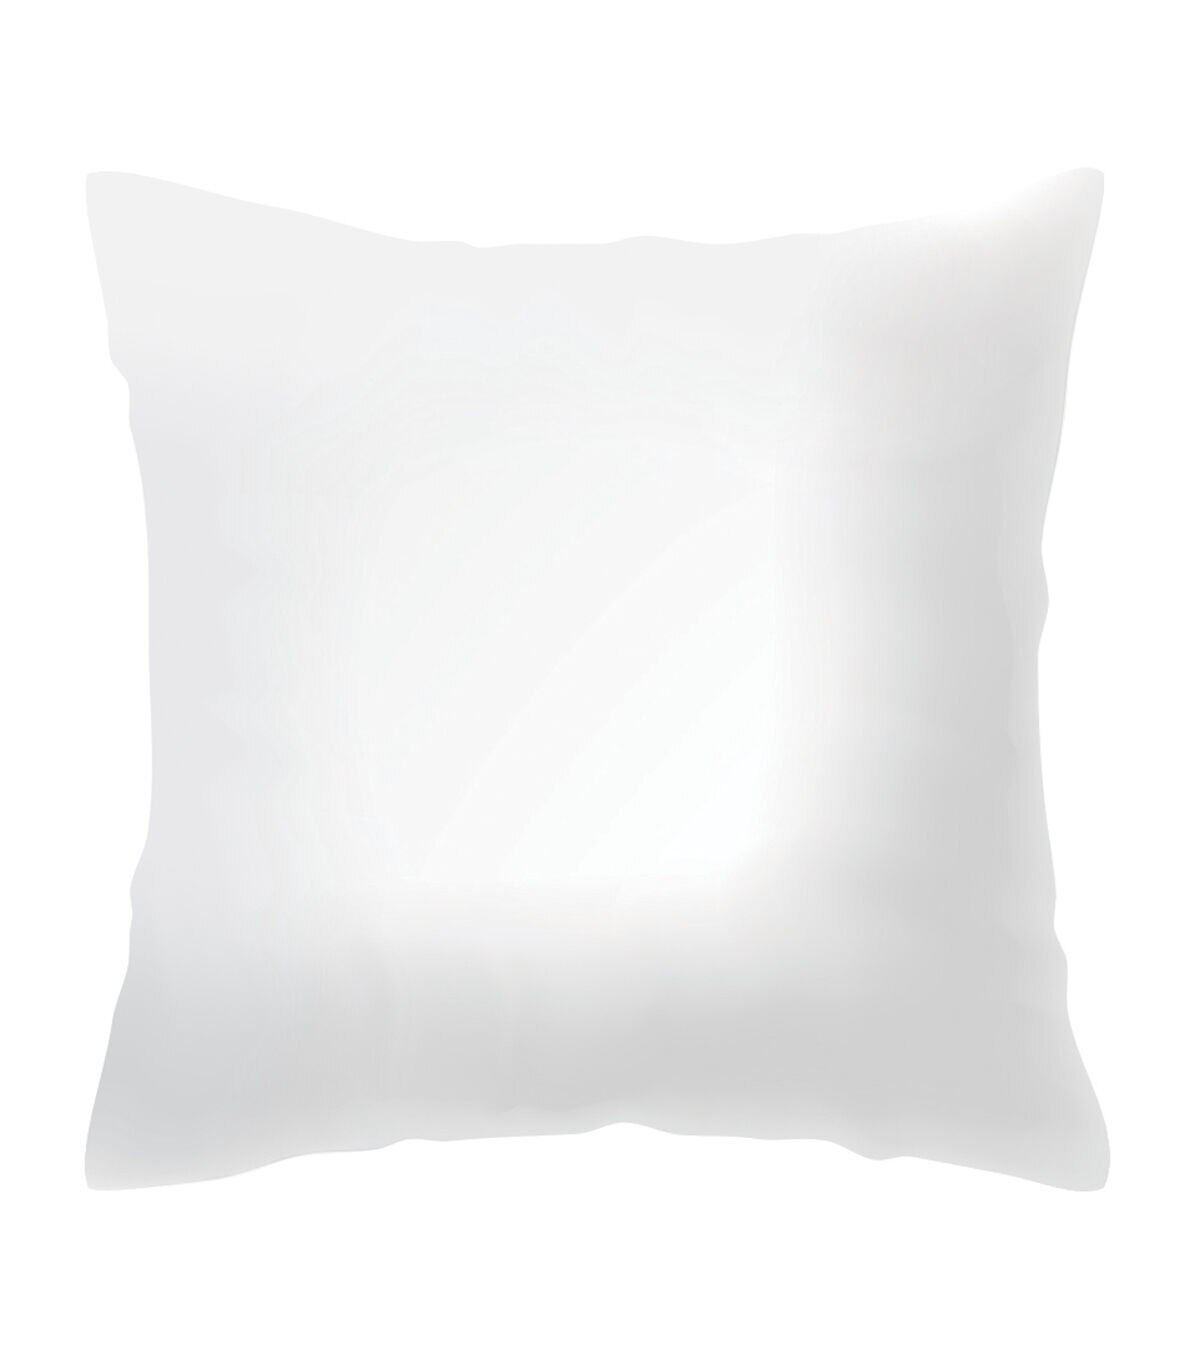 foam pillow inserts